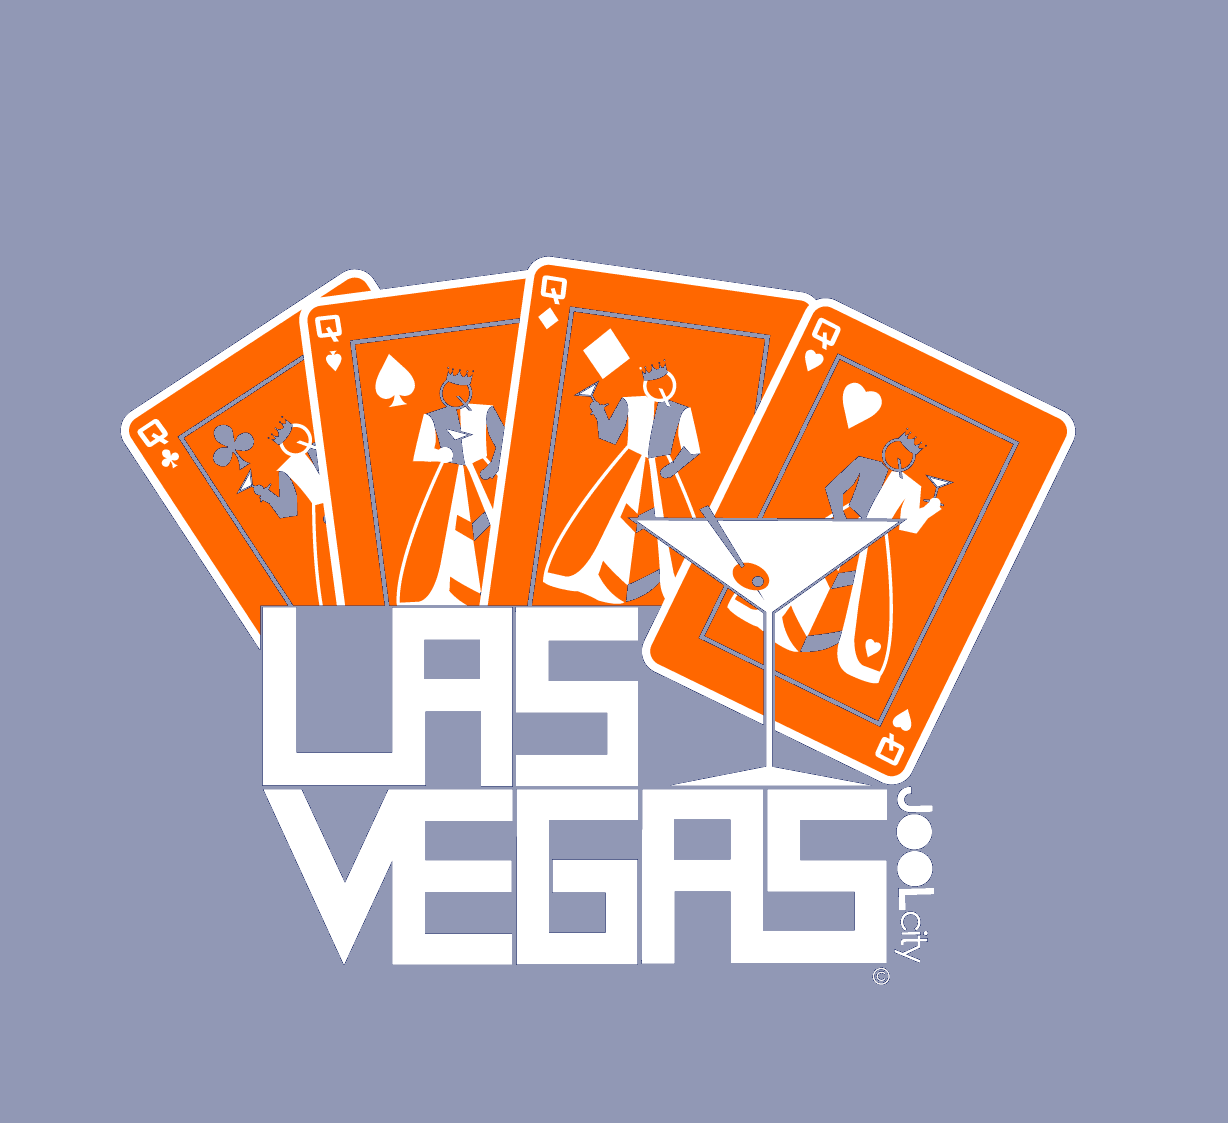 Las Vegas Card Shark Baby Onesie designed by JOOLcity